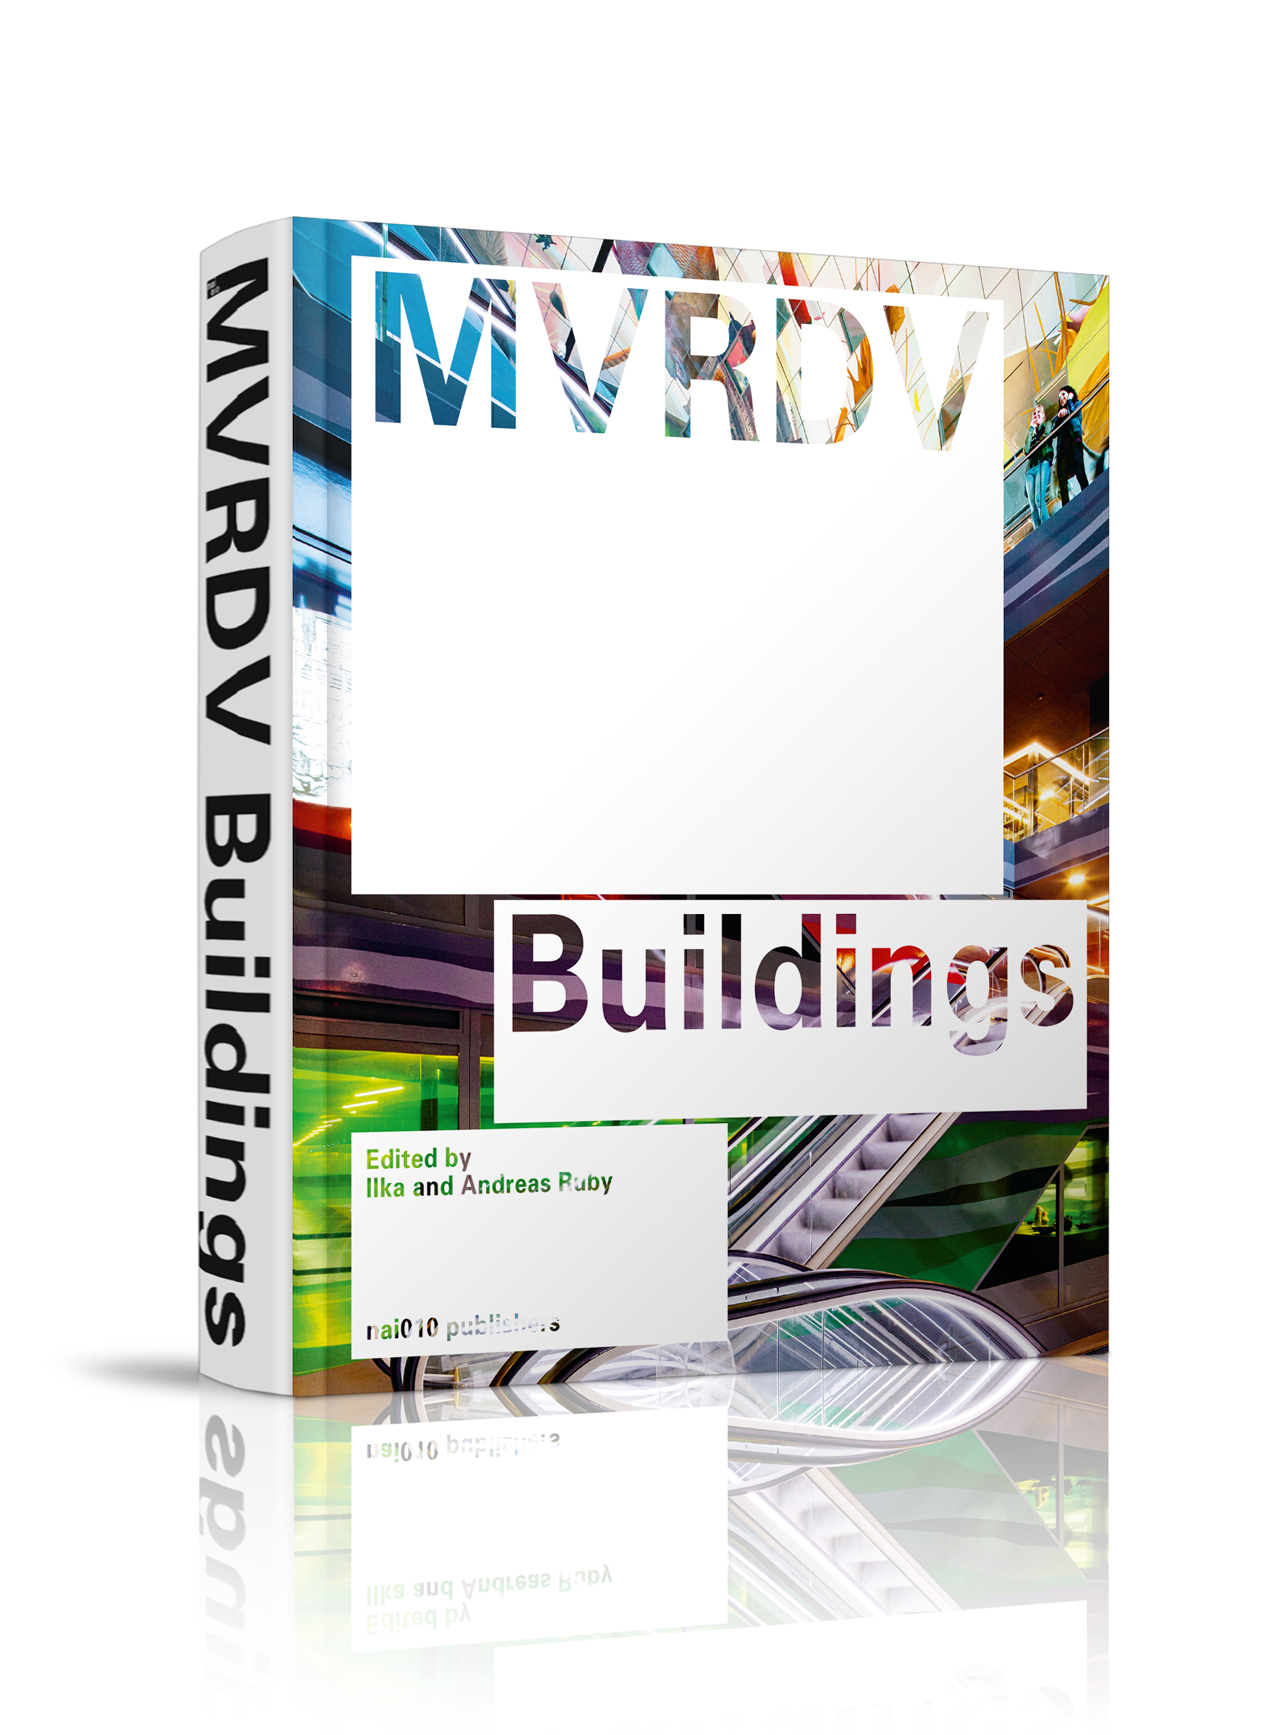 MVRDV - Updated Edition of MVRDV Buildings Monograph released 